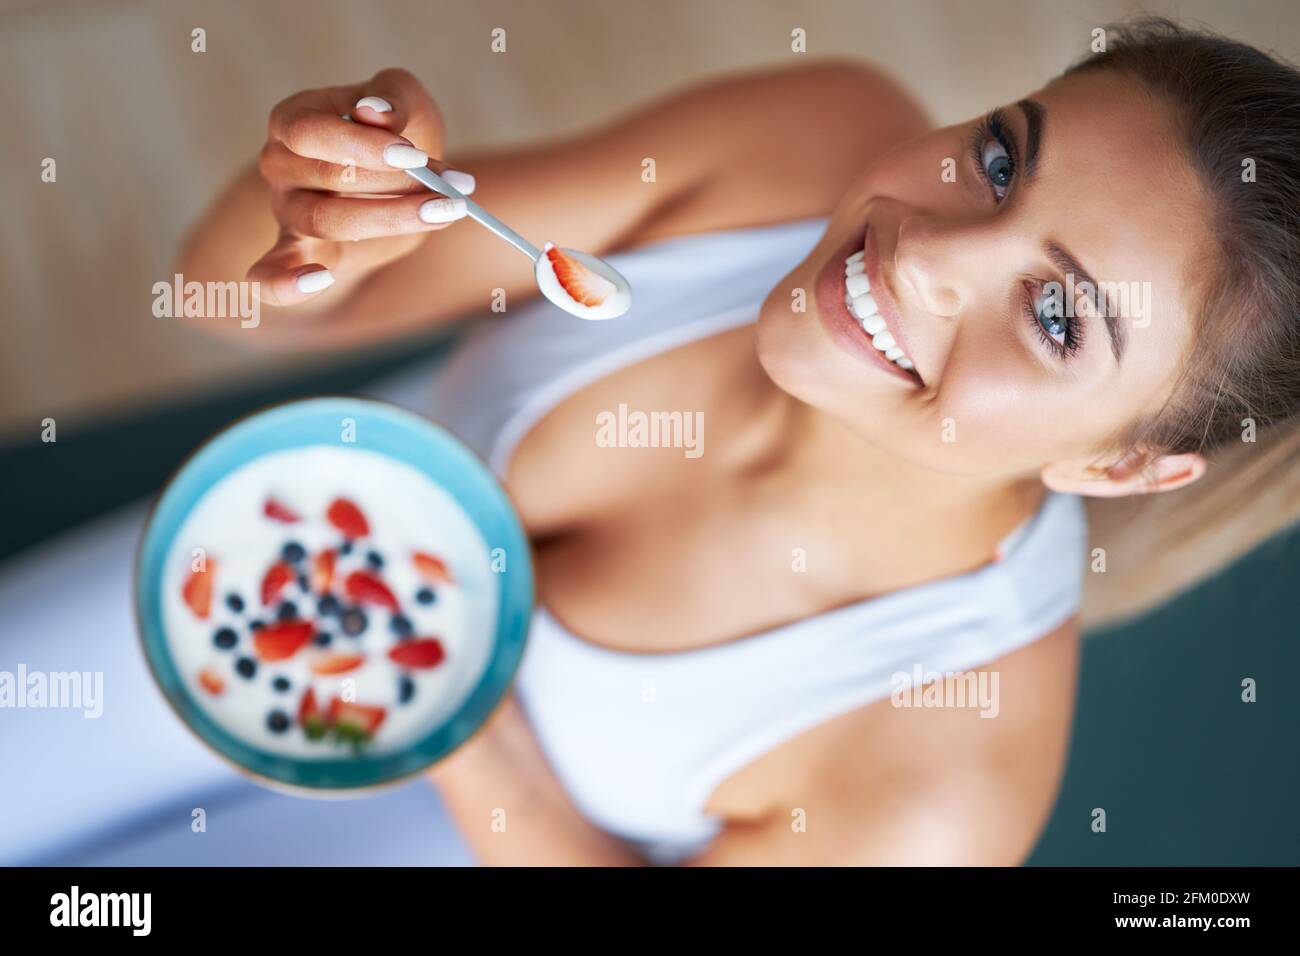 Portrait of beautiful hispanic woman eating yoghurt promoting healthy lifestyle Stock Photo